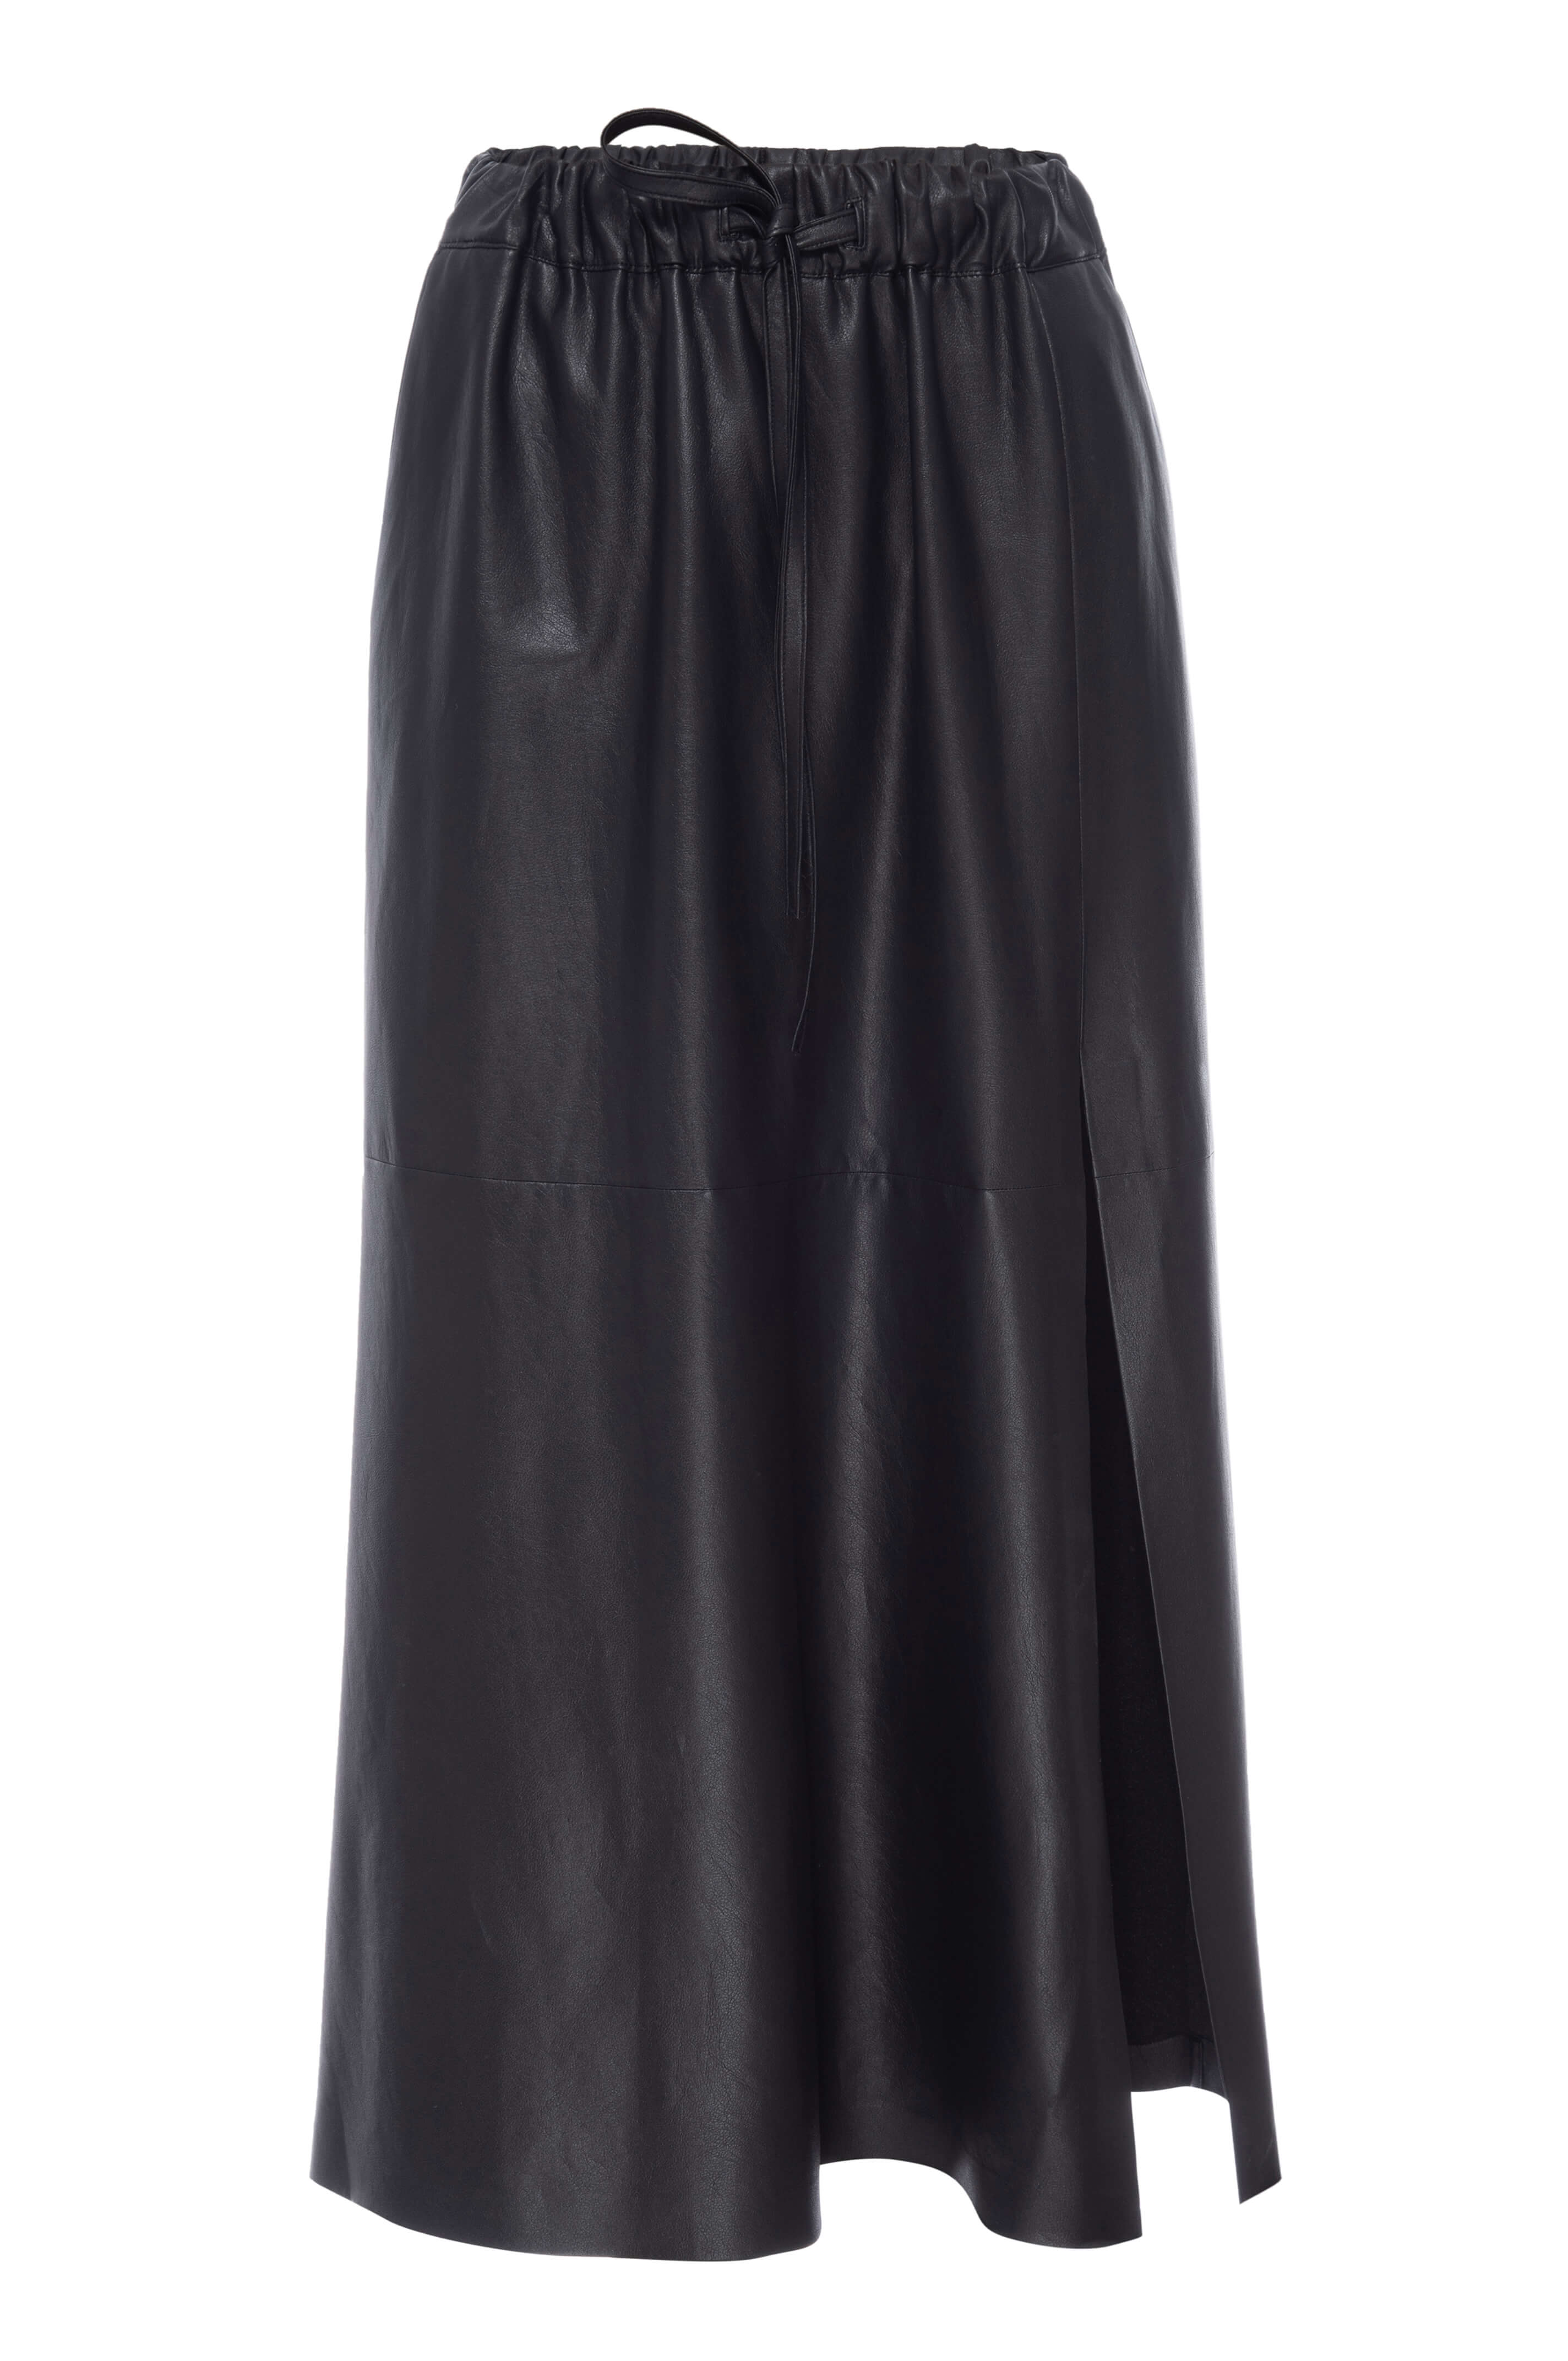 STAUD Laurel Vegan Leather Midi Skirt in Black | Lyst